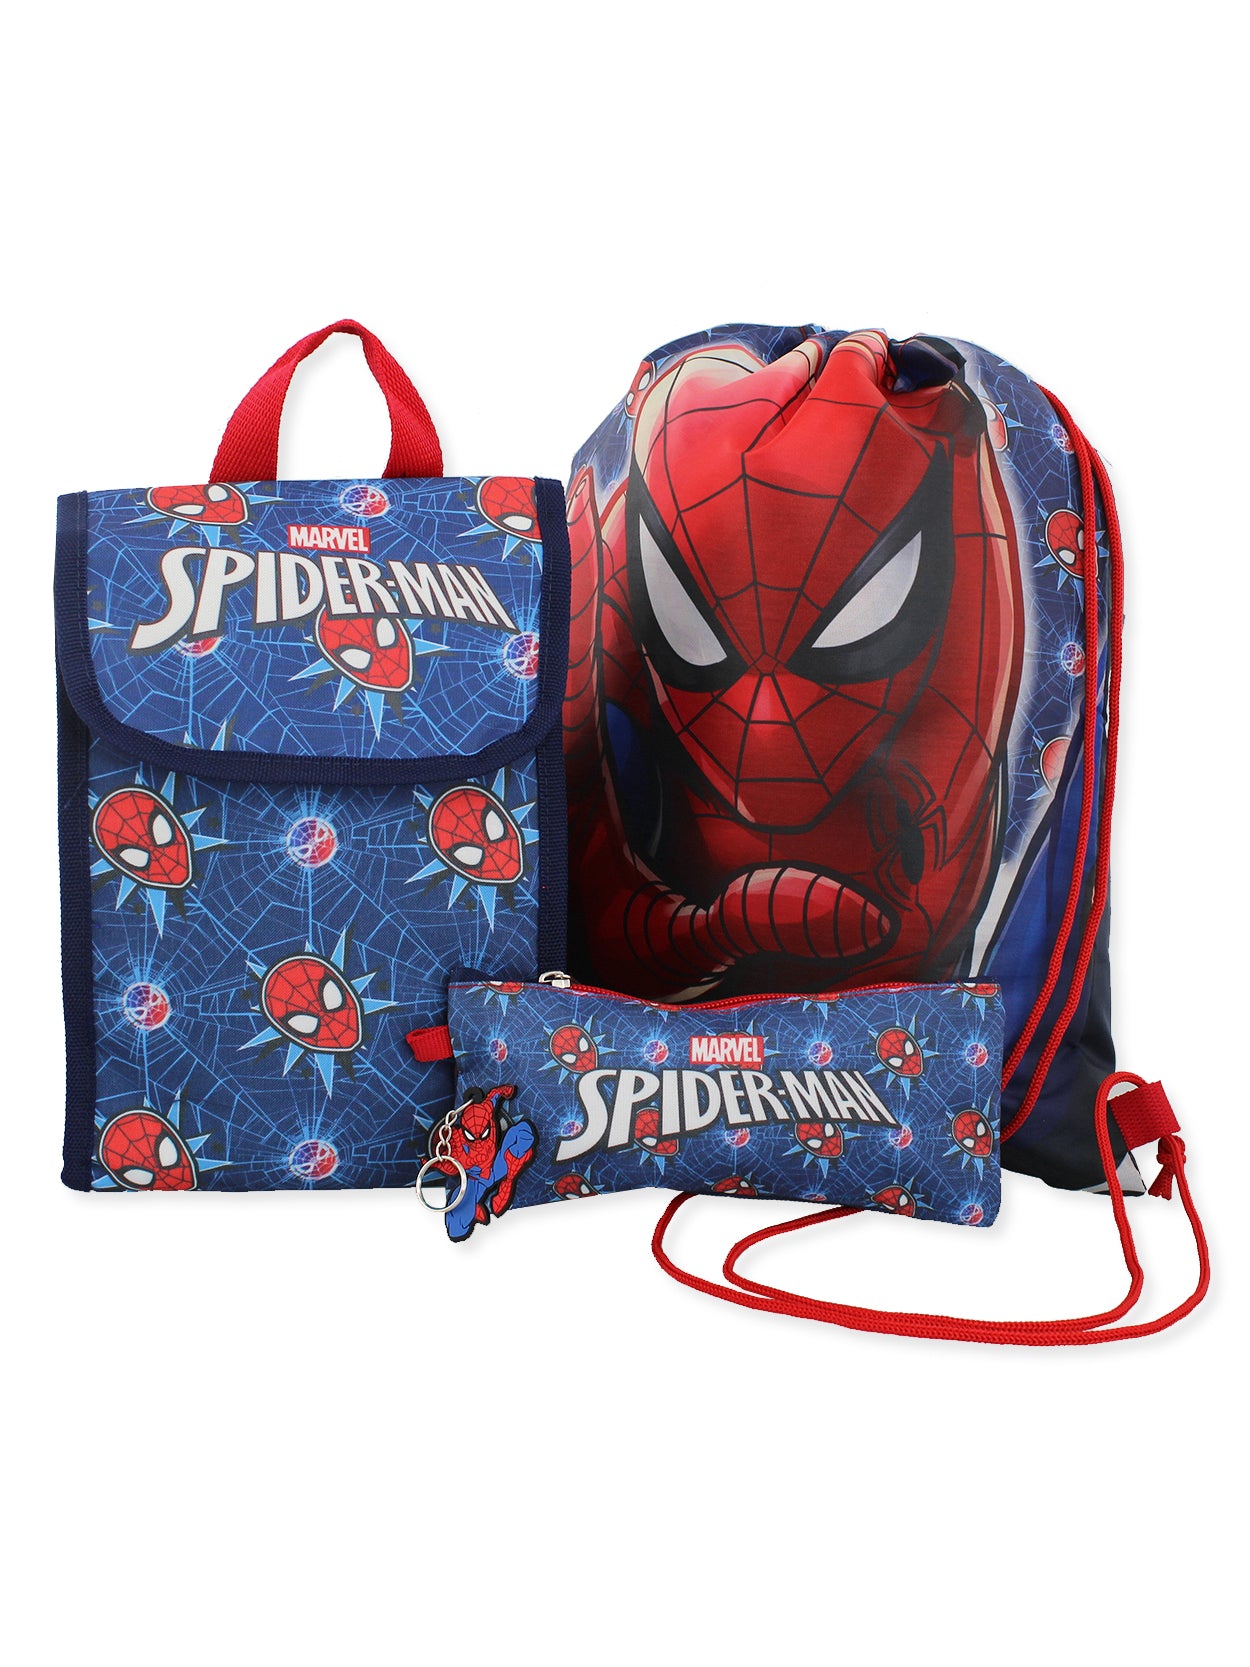 Marvel Avenger Spiderman Toddler Backpack School Book bag Preschool Boy  Kids 12